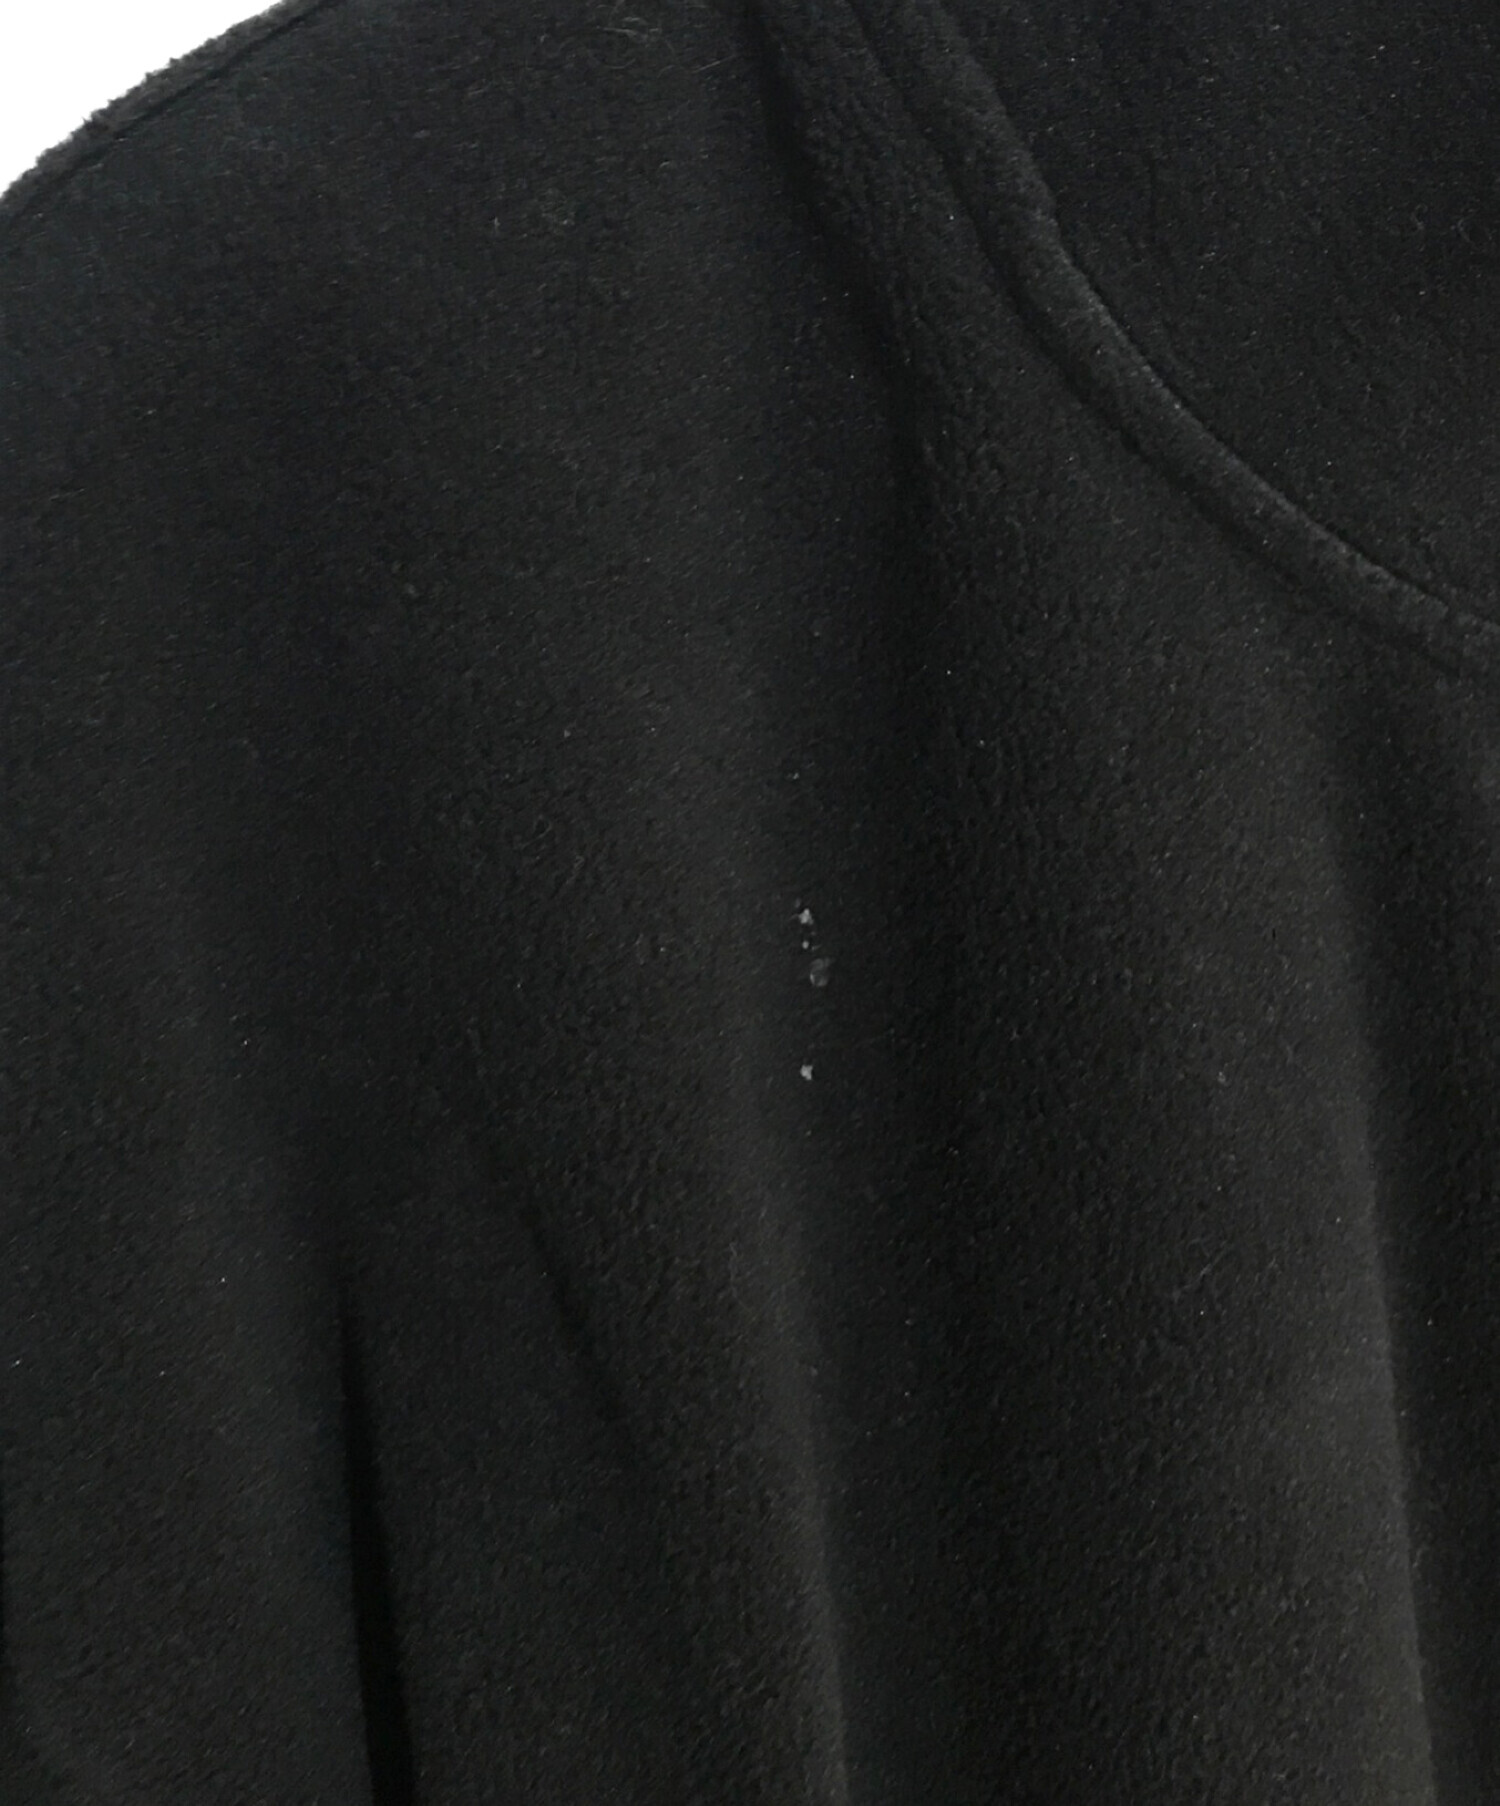 Supreme (シュプリーム) polartec zip jacket/ポーラテックジップジャケット ブラック サイズ:SIZE L